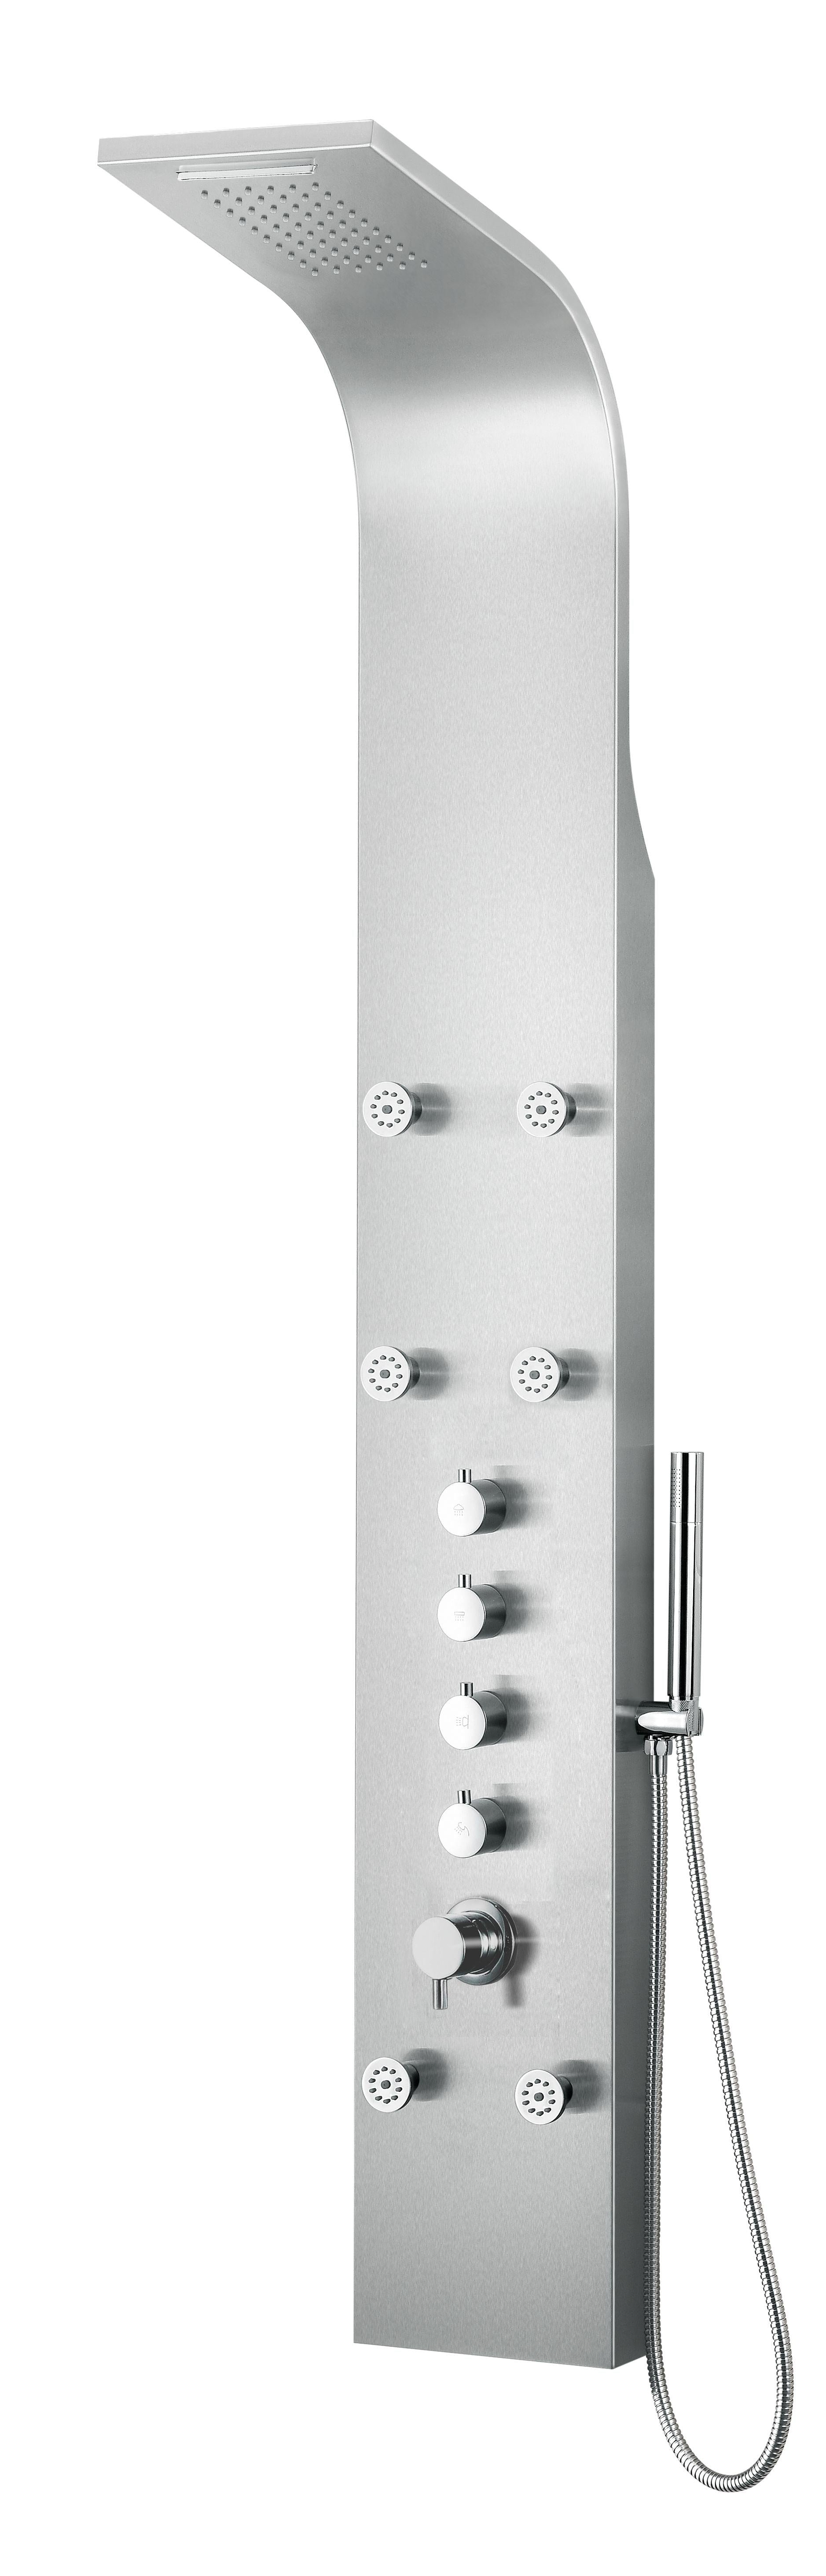 Alfi Brand ABSP40 Modern Stainless Steel Shower Panel with 6 Body Sprays-DirectSinks